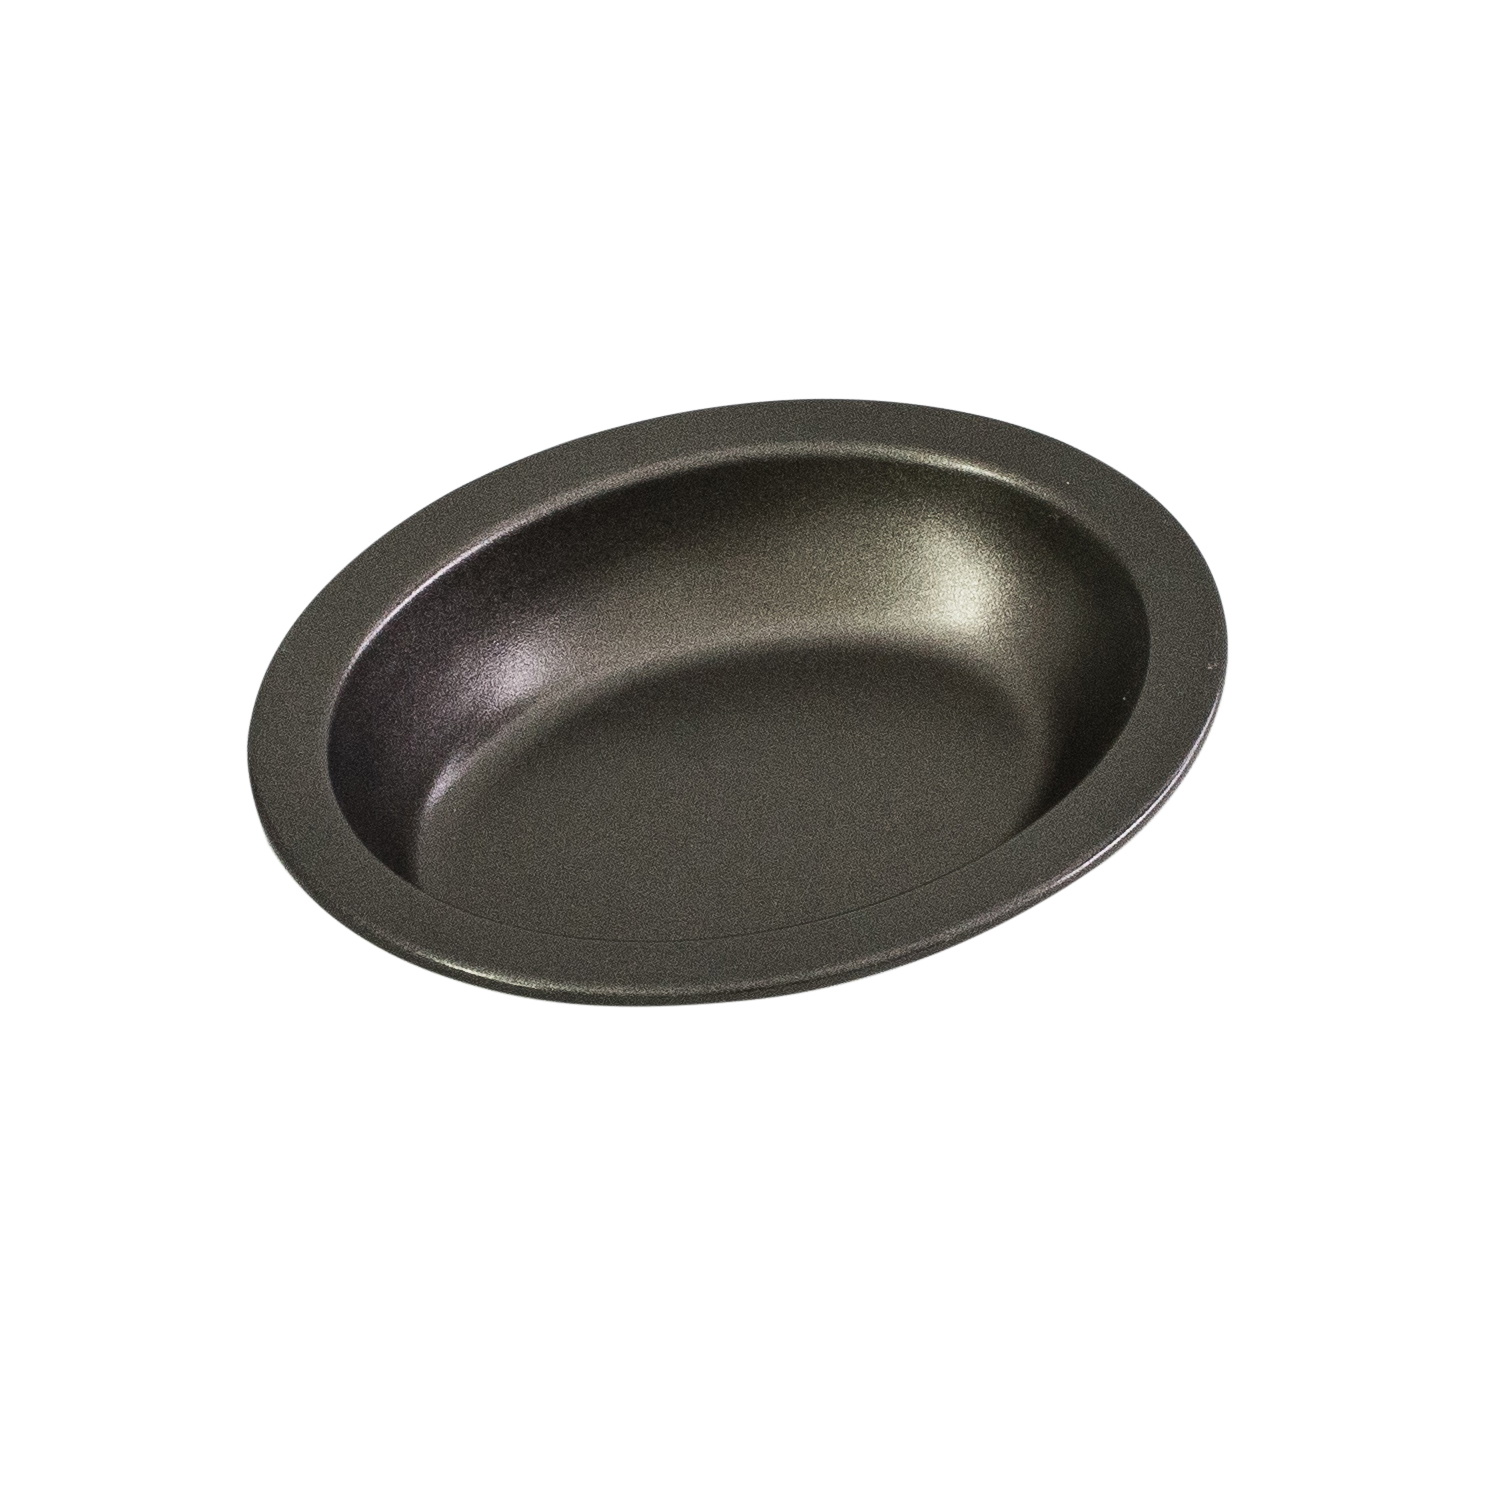 Bakemaster Ind Oval Pie Dish 13.5X10X3CM